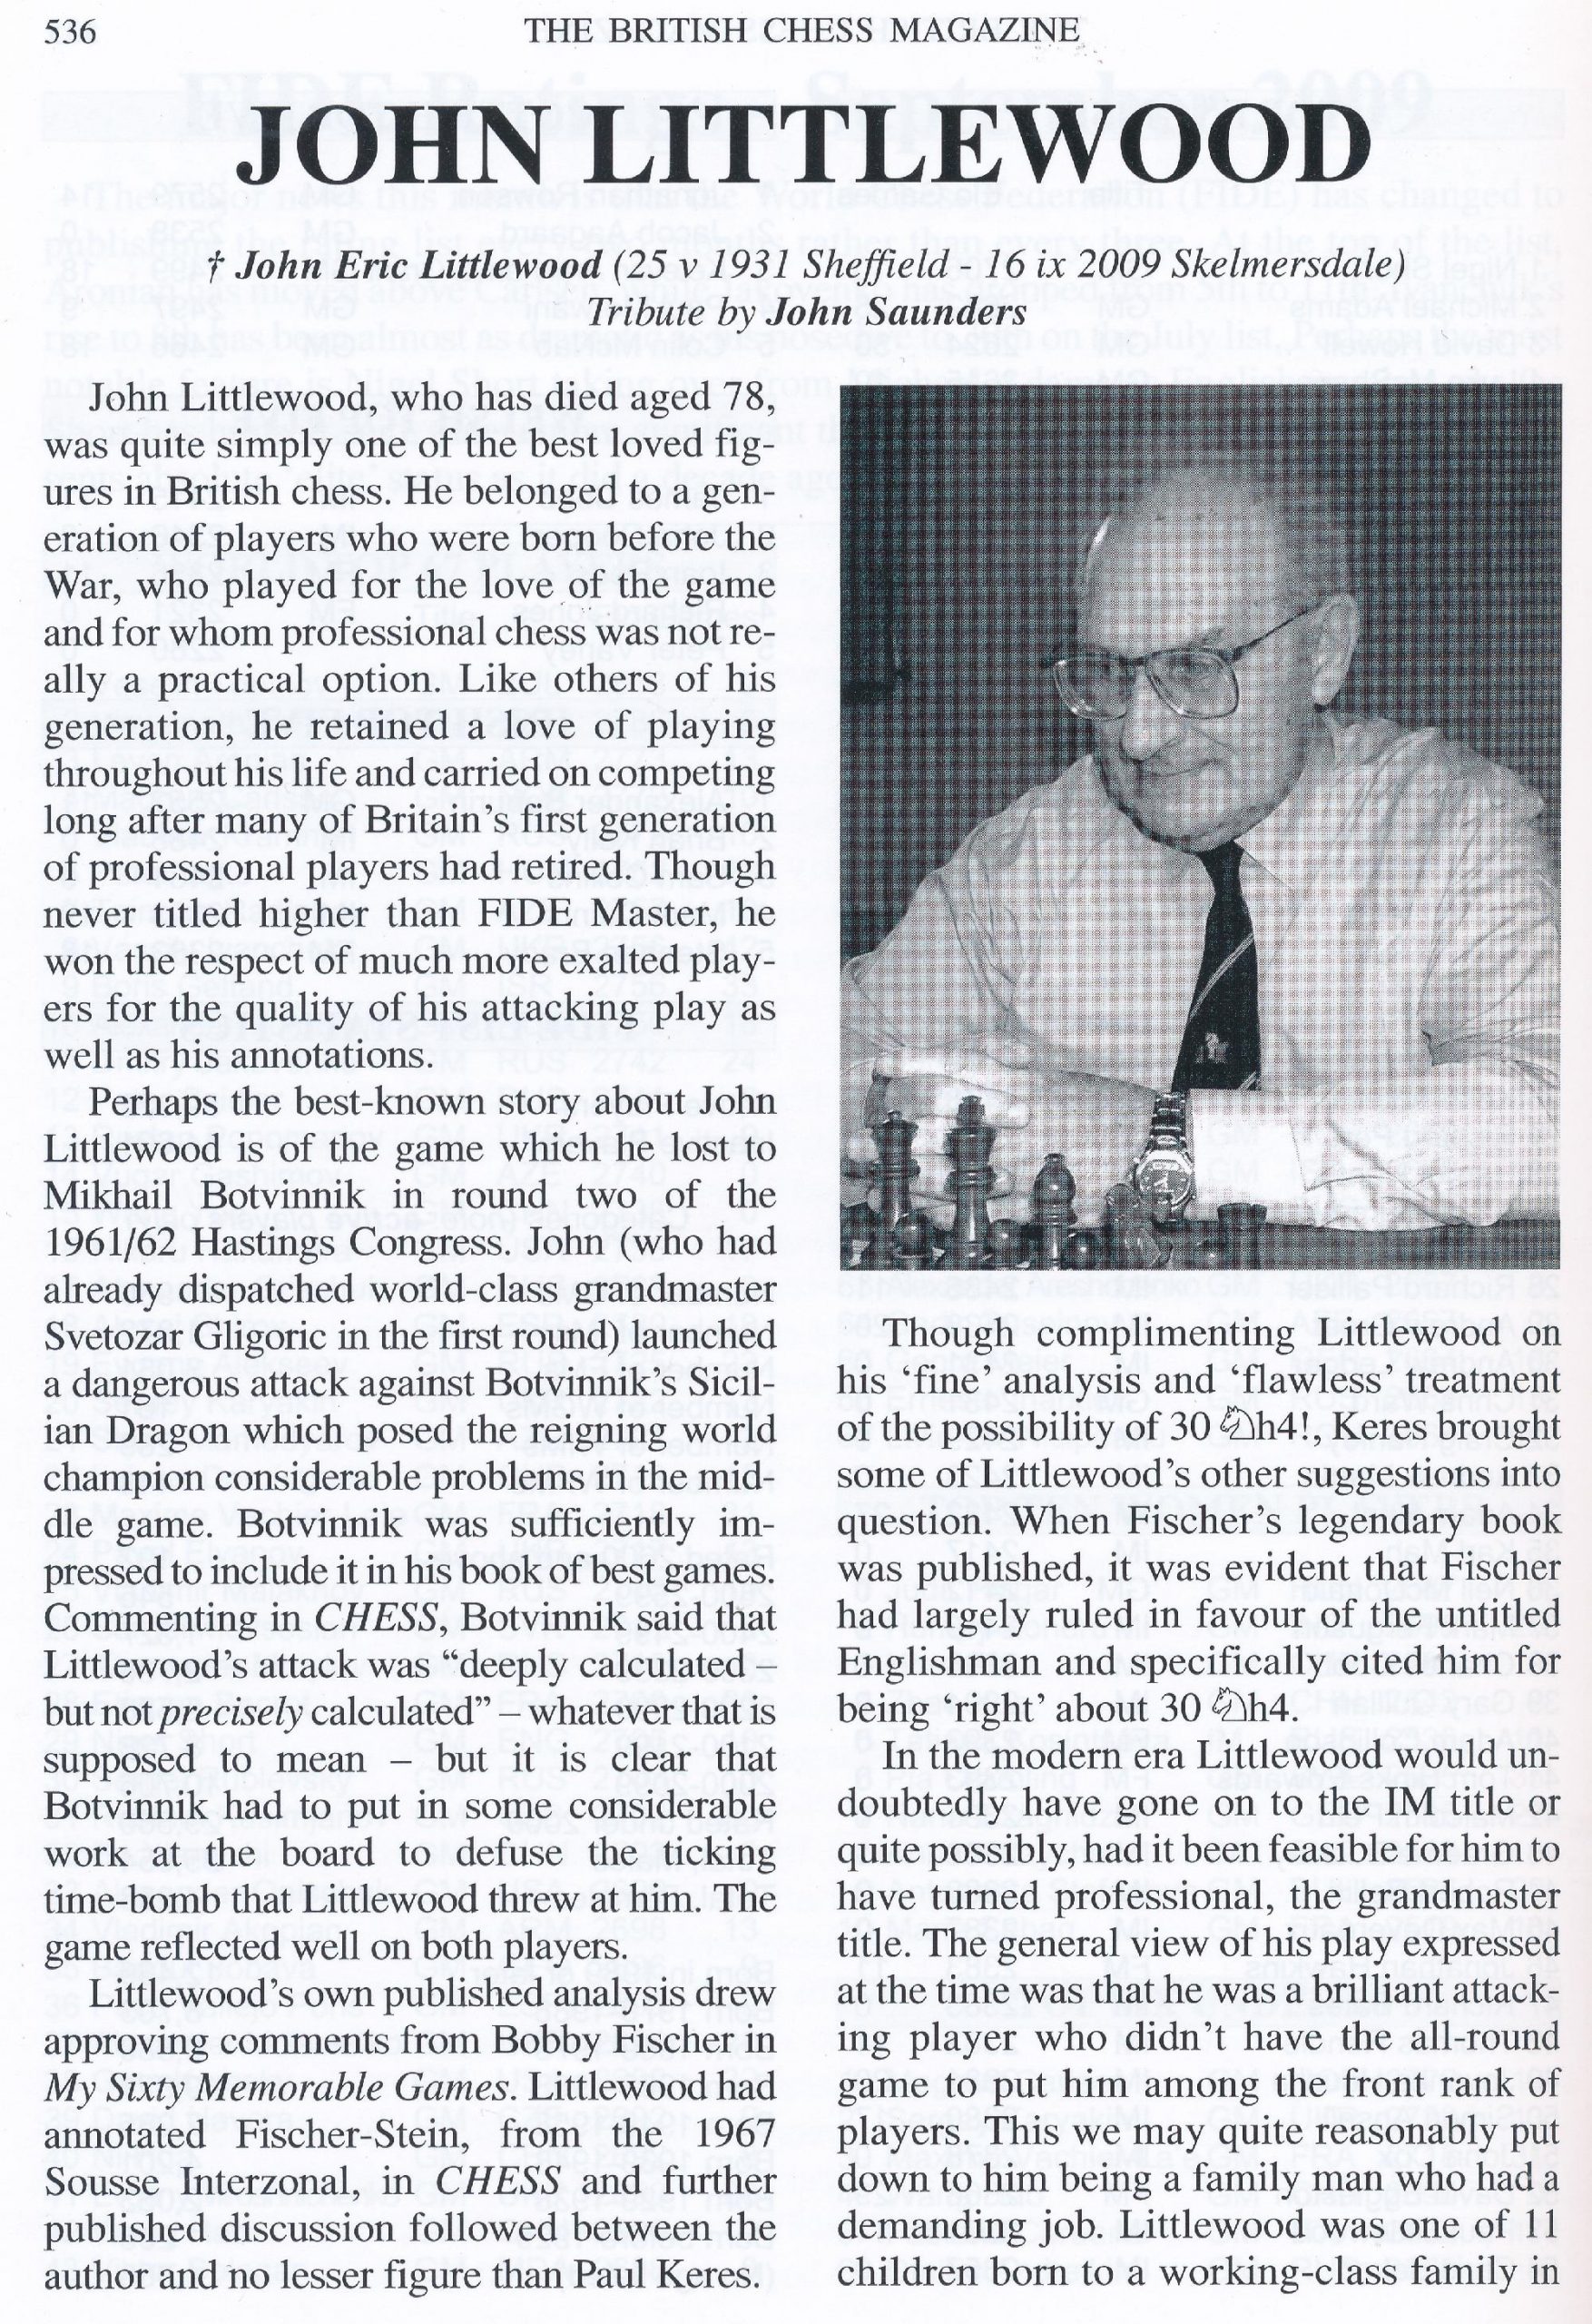 British Chess Magazine, Volume CXXIV (129), 2009, Number 10, October, page 536